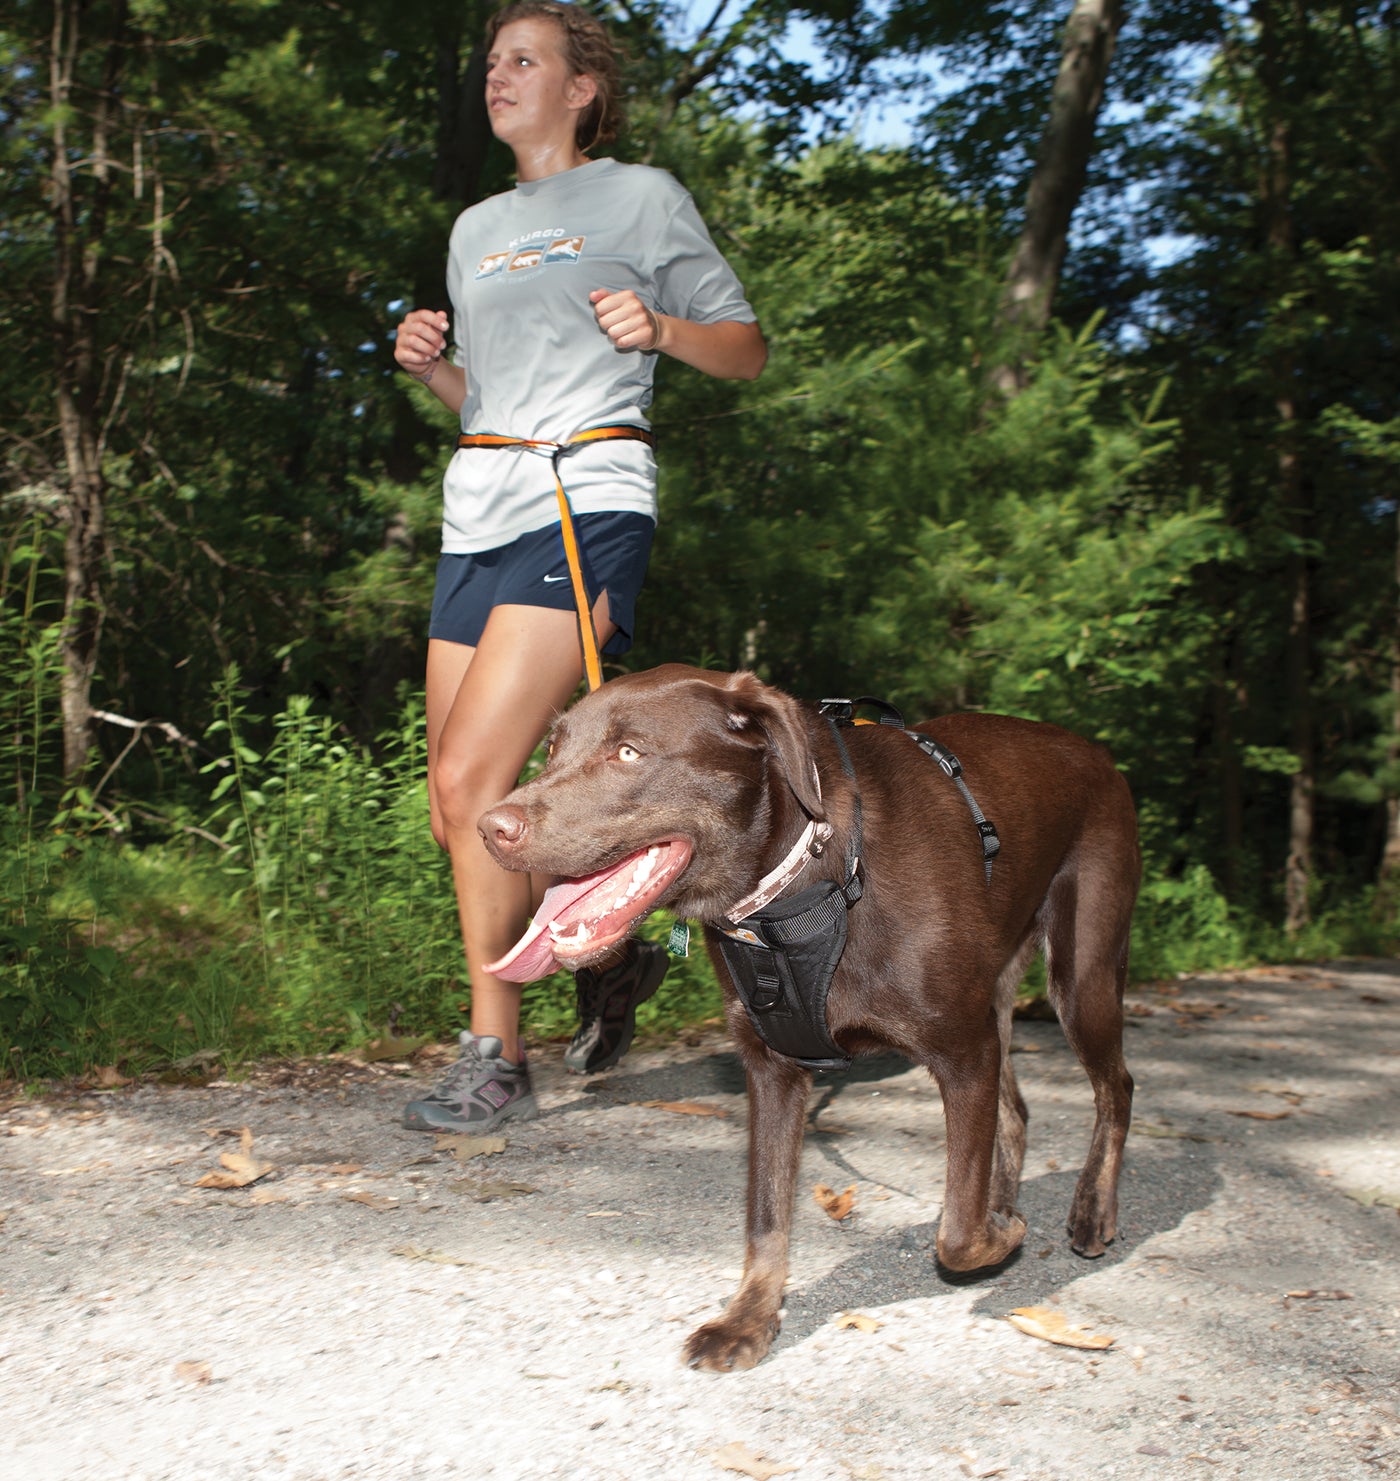 Kurgo Reflect and Protect Multi Purpose Quantum Dog Leash